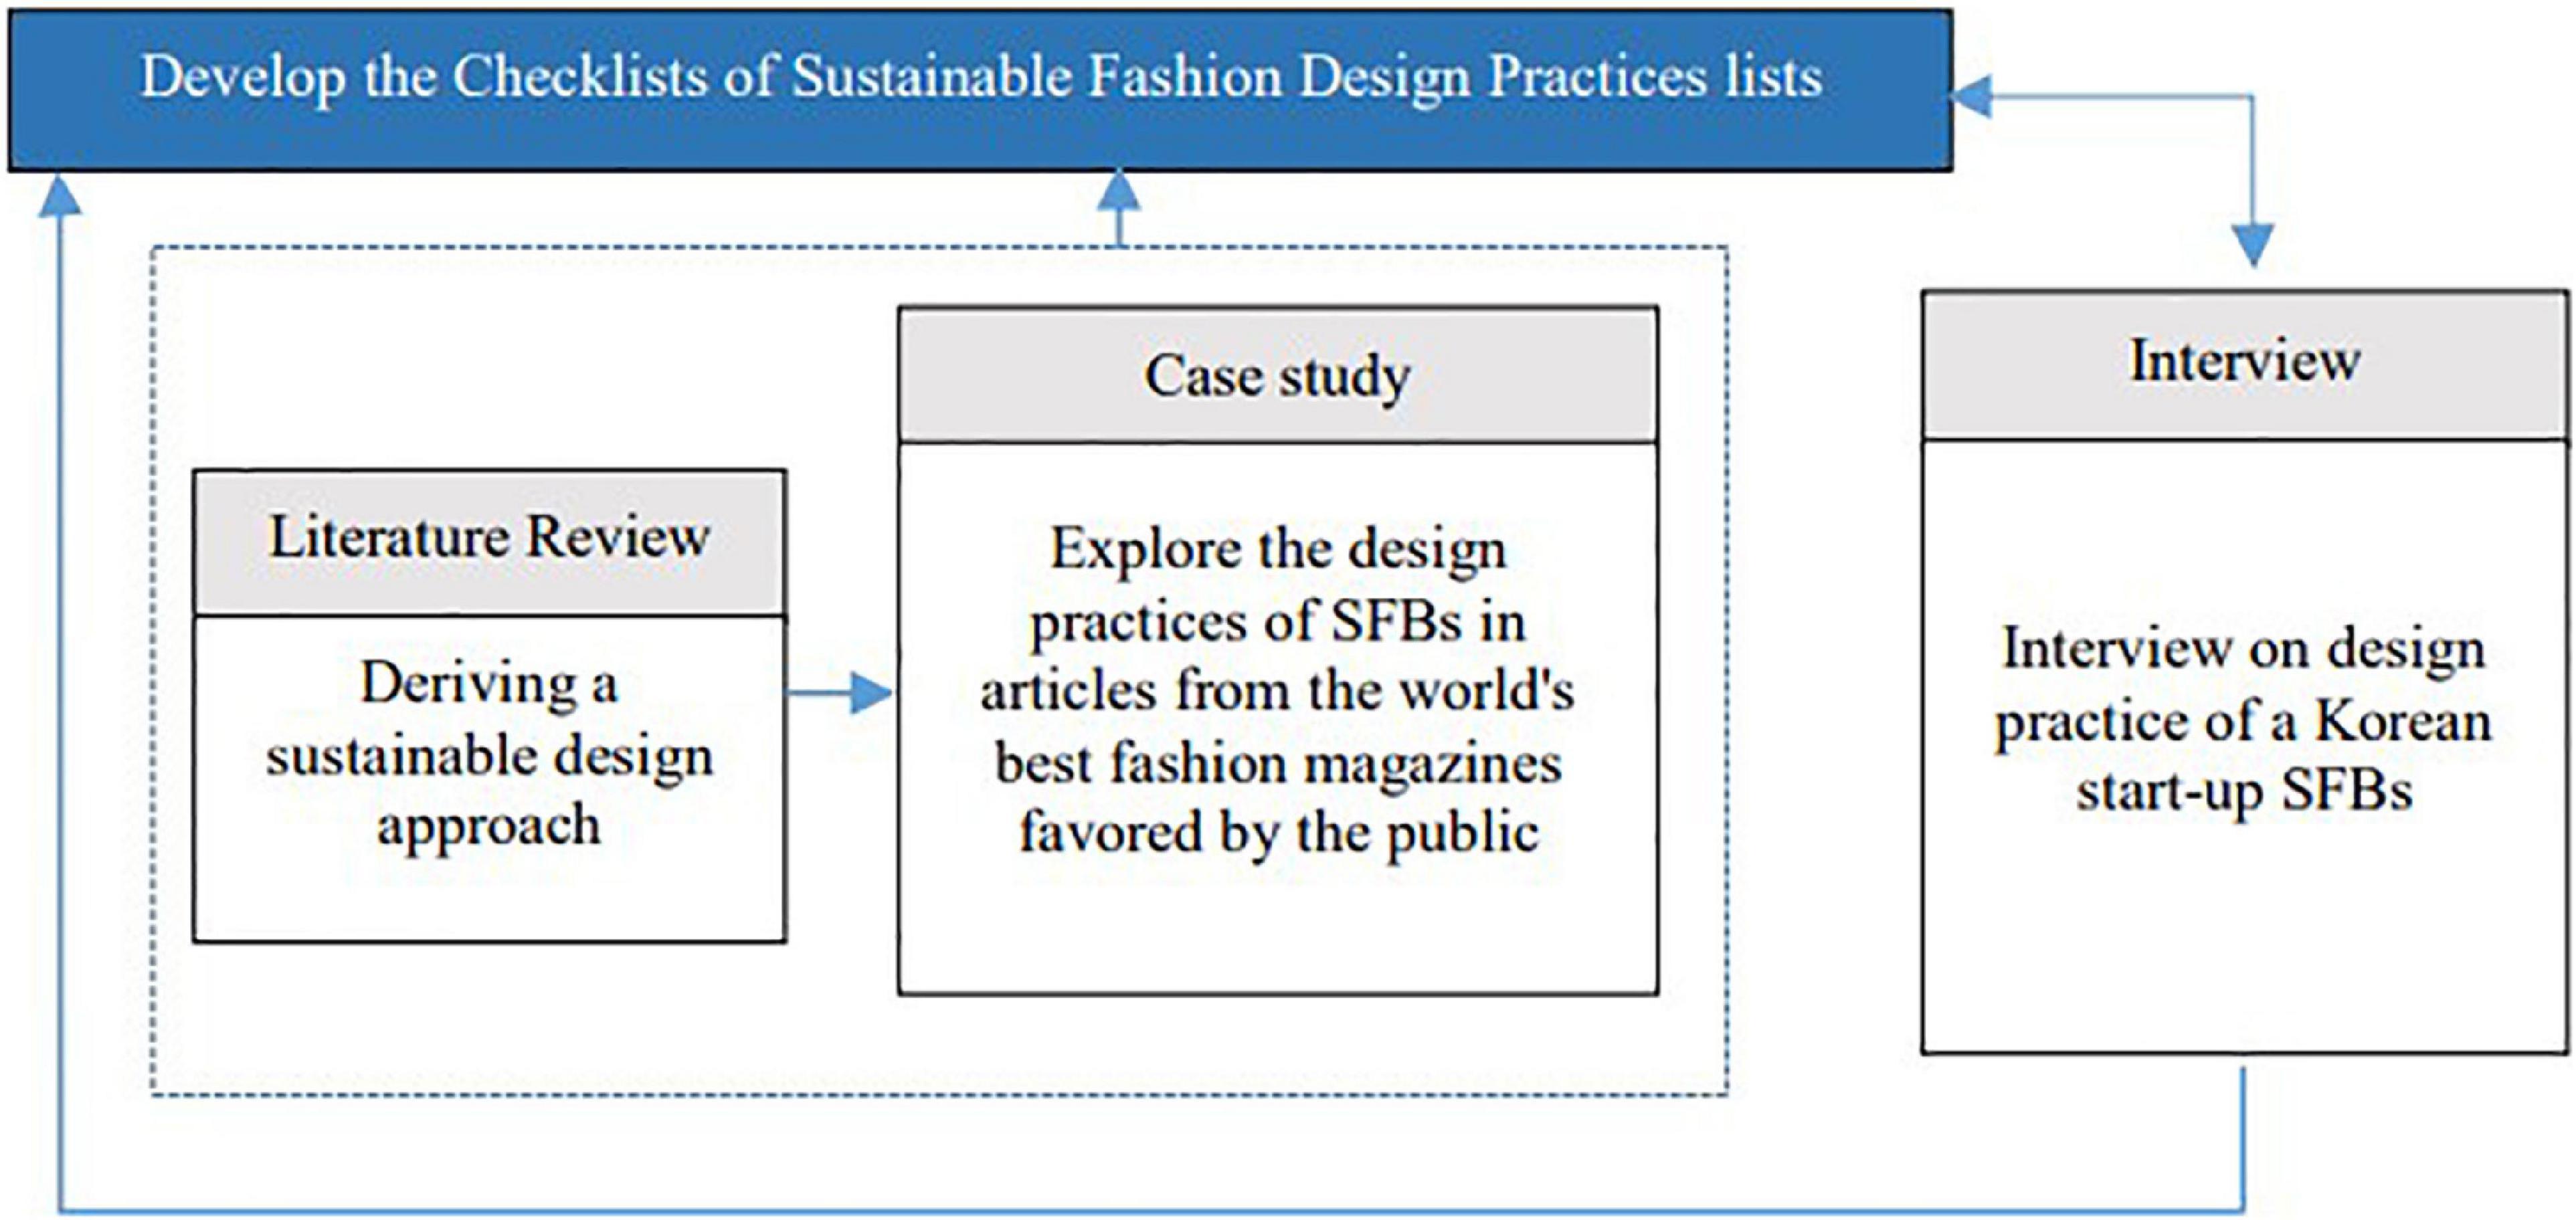 9 Ways to Practice Sustainable Fashion